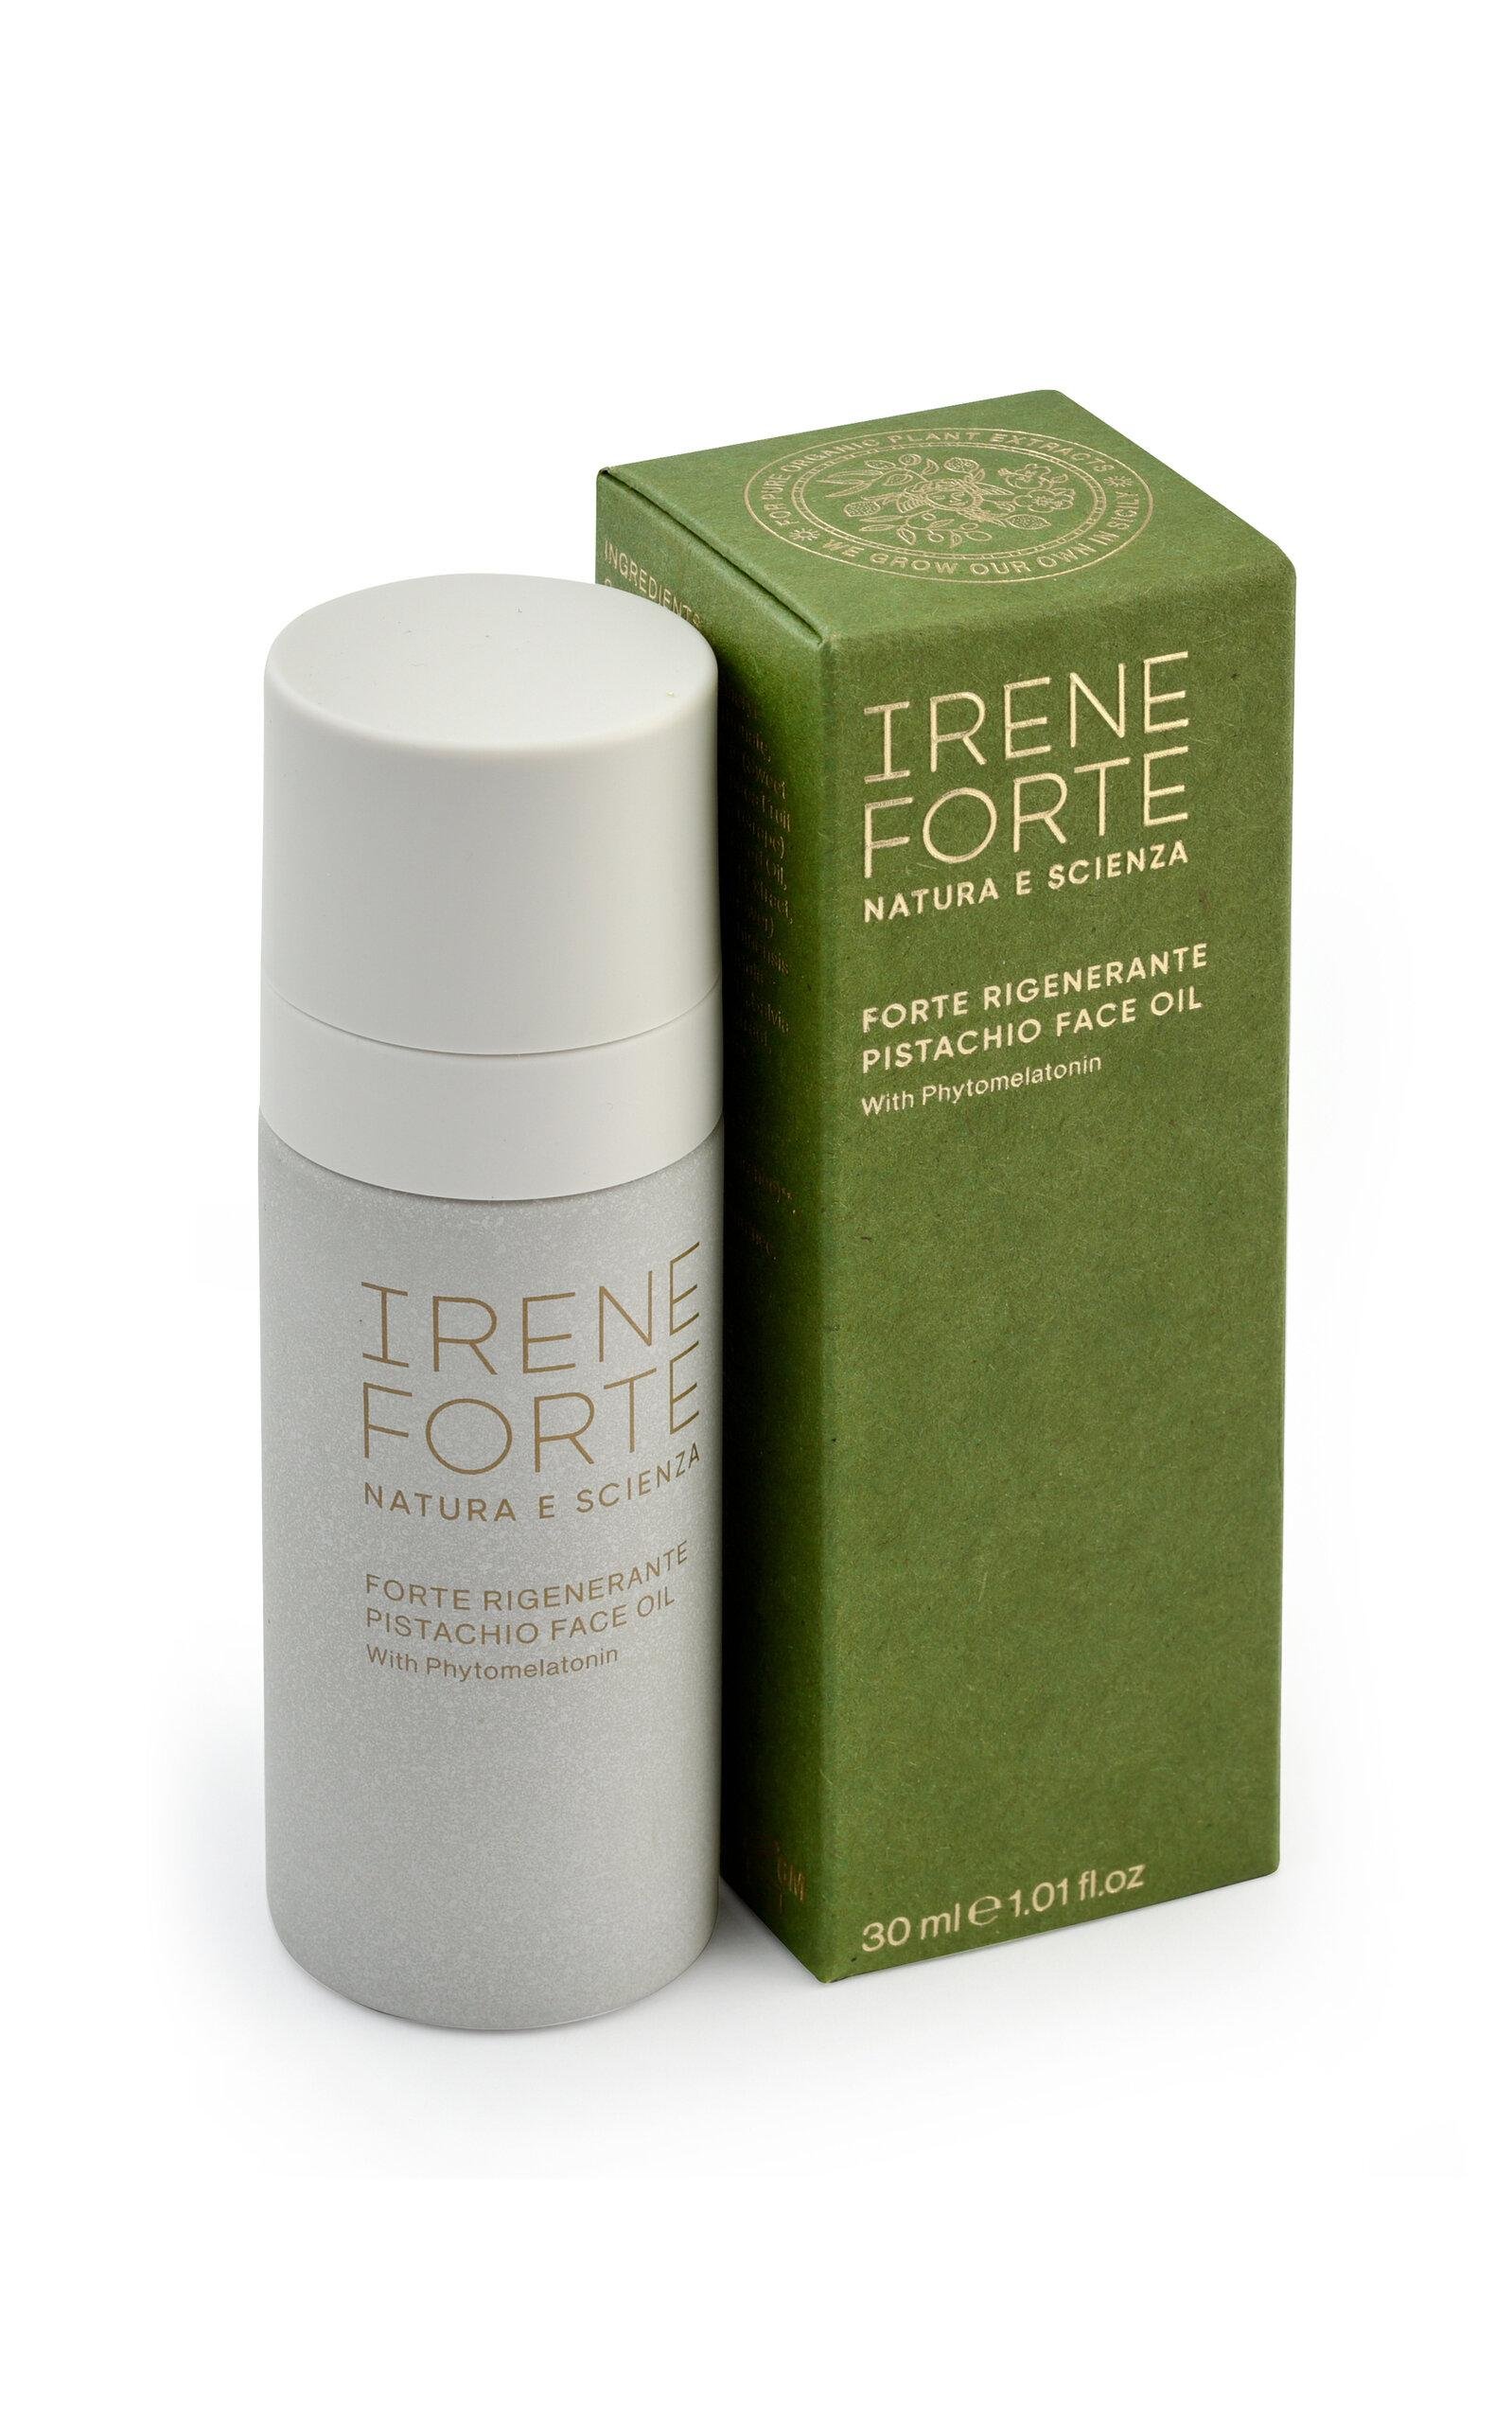 Irene Forte Pistachio Face Oil - Moda Operandi by IRENE FORTE